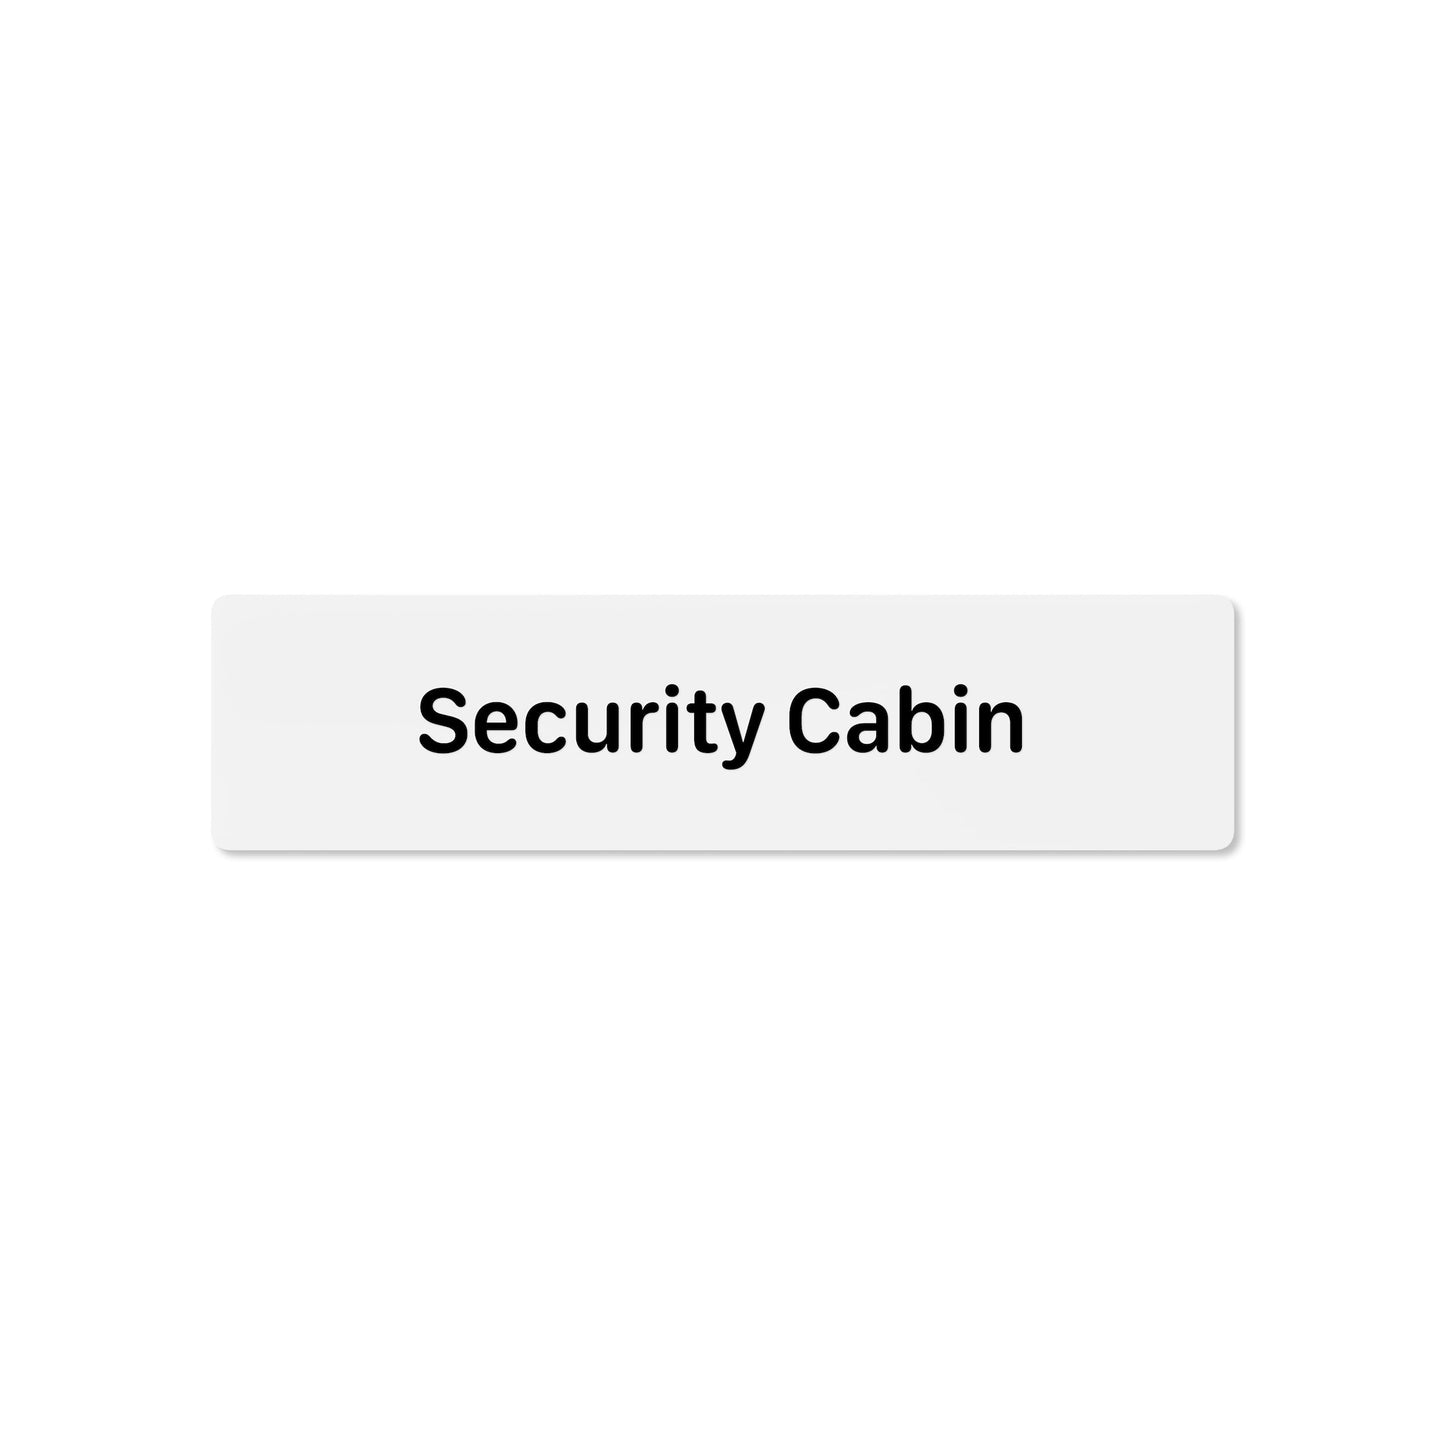 Security Cabin